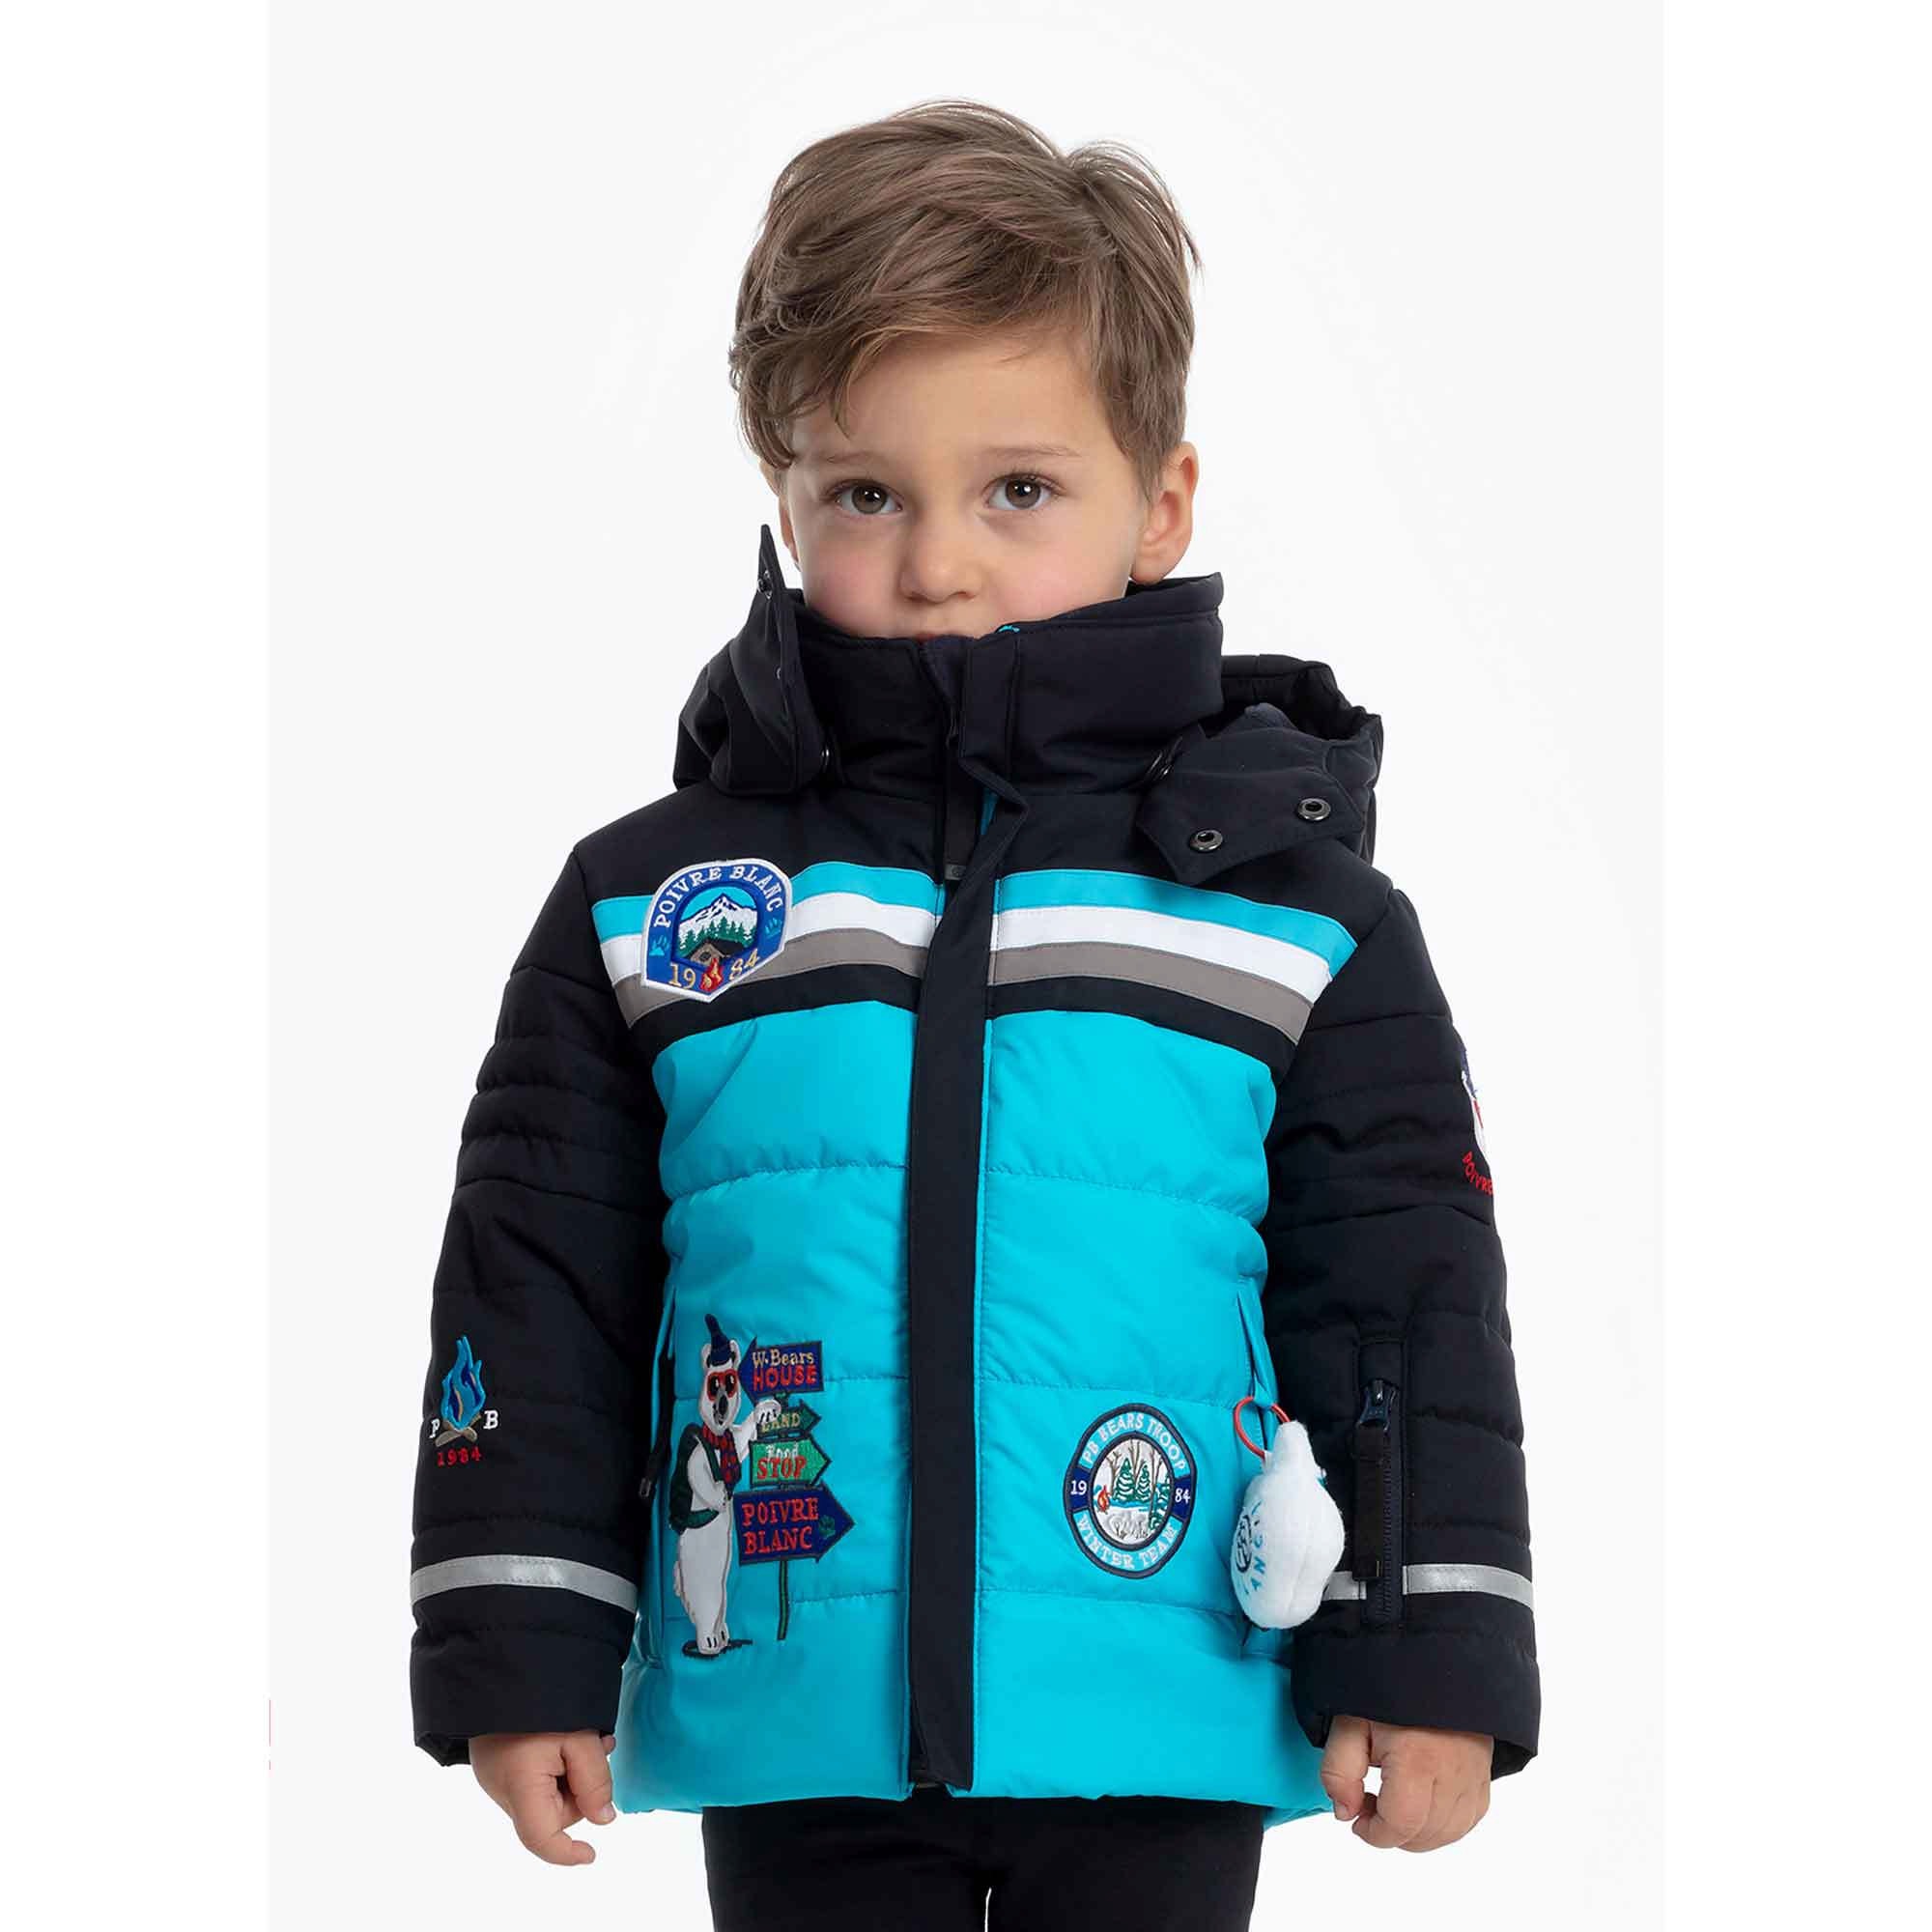  Ski & Snow Jackets -  poivre blanc Ski Jacket 274084